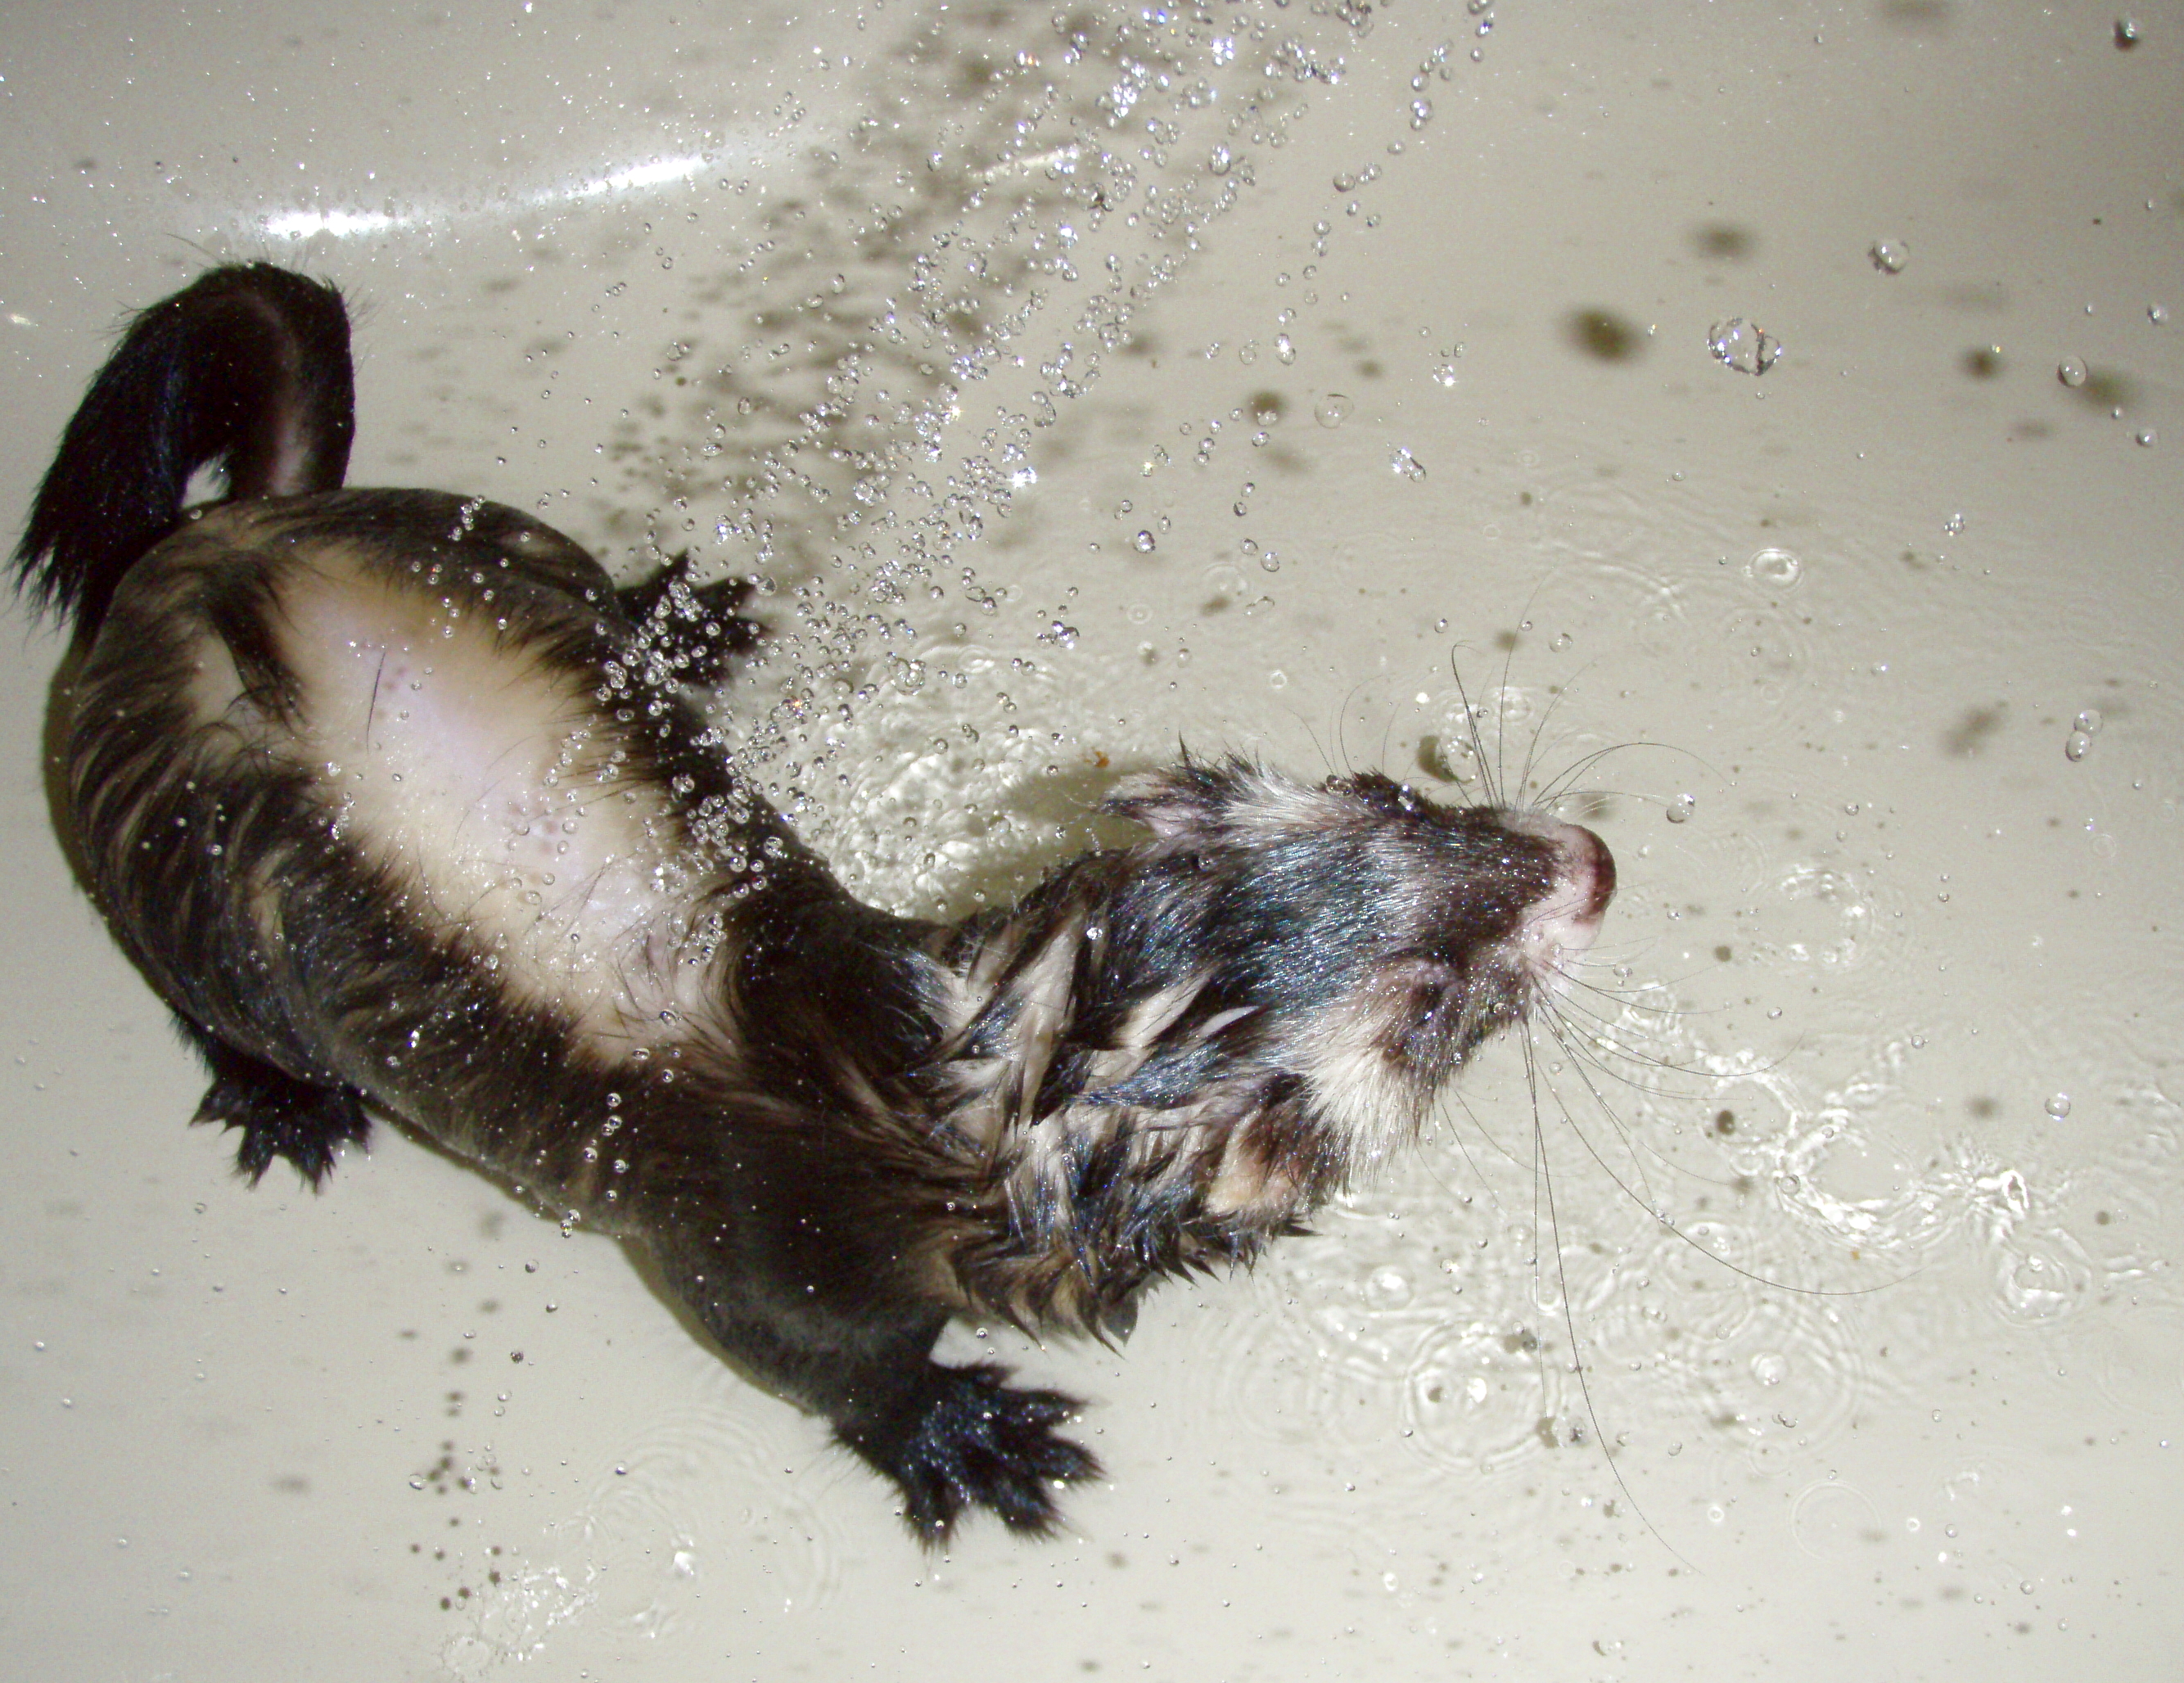 Ferret in the shower, Animal, Bath, Cute, Drops, HQ Photo